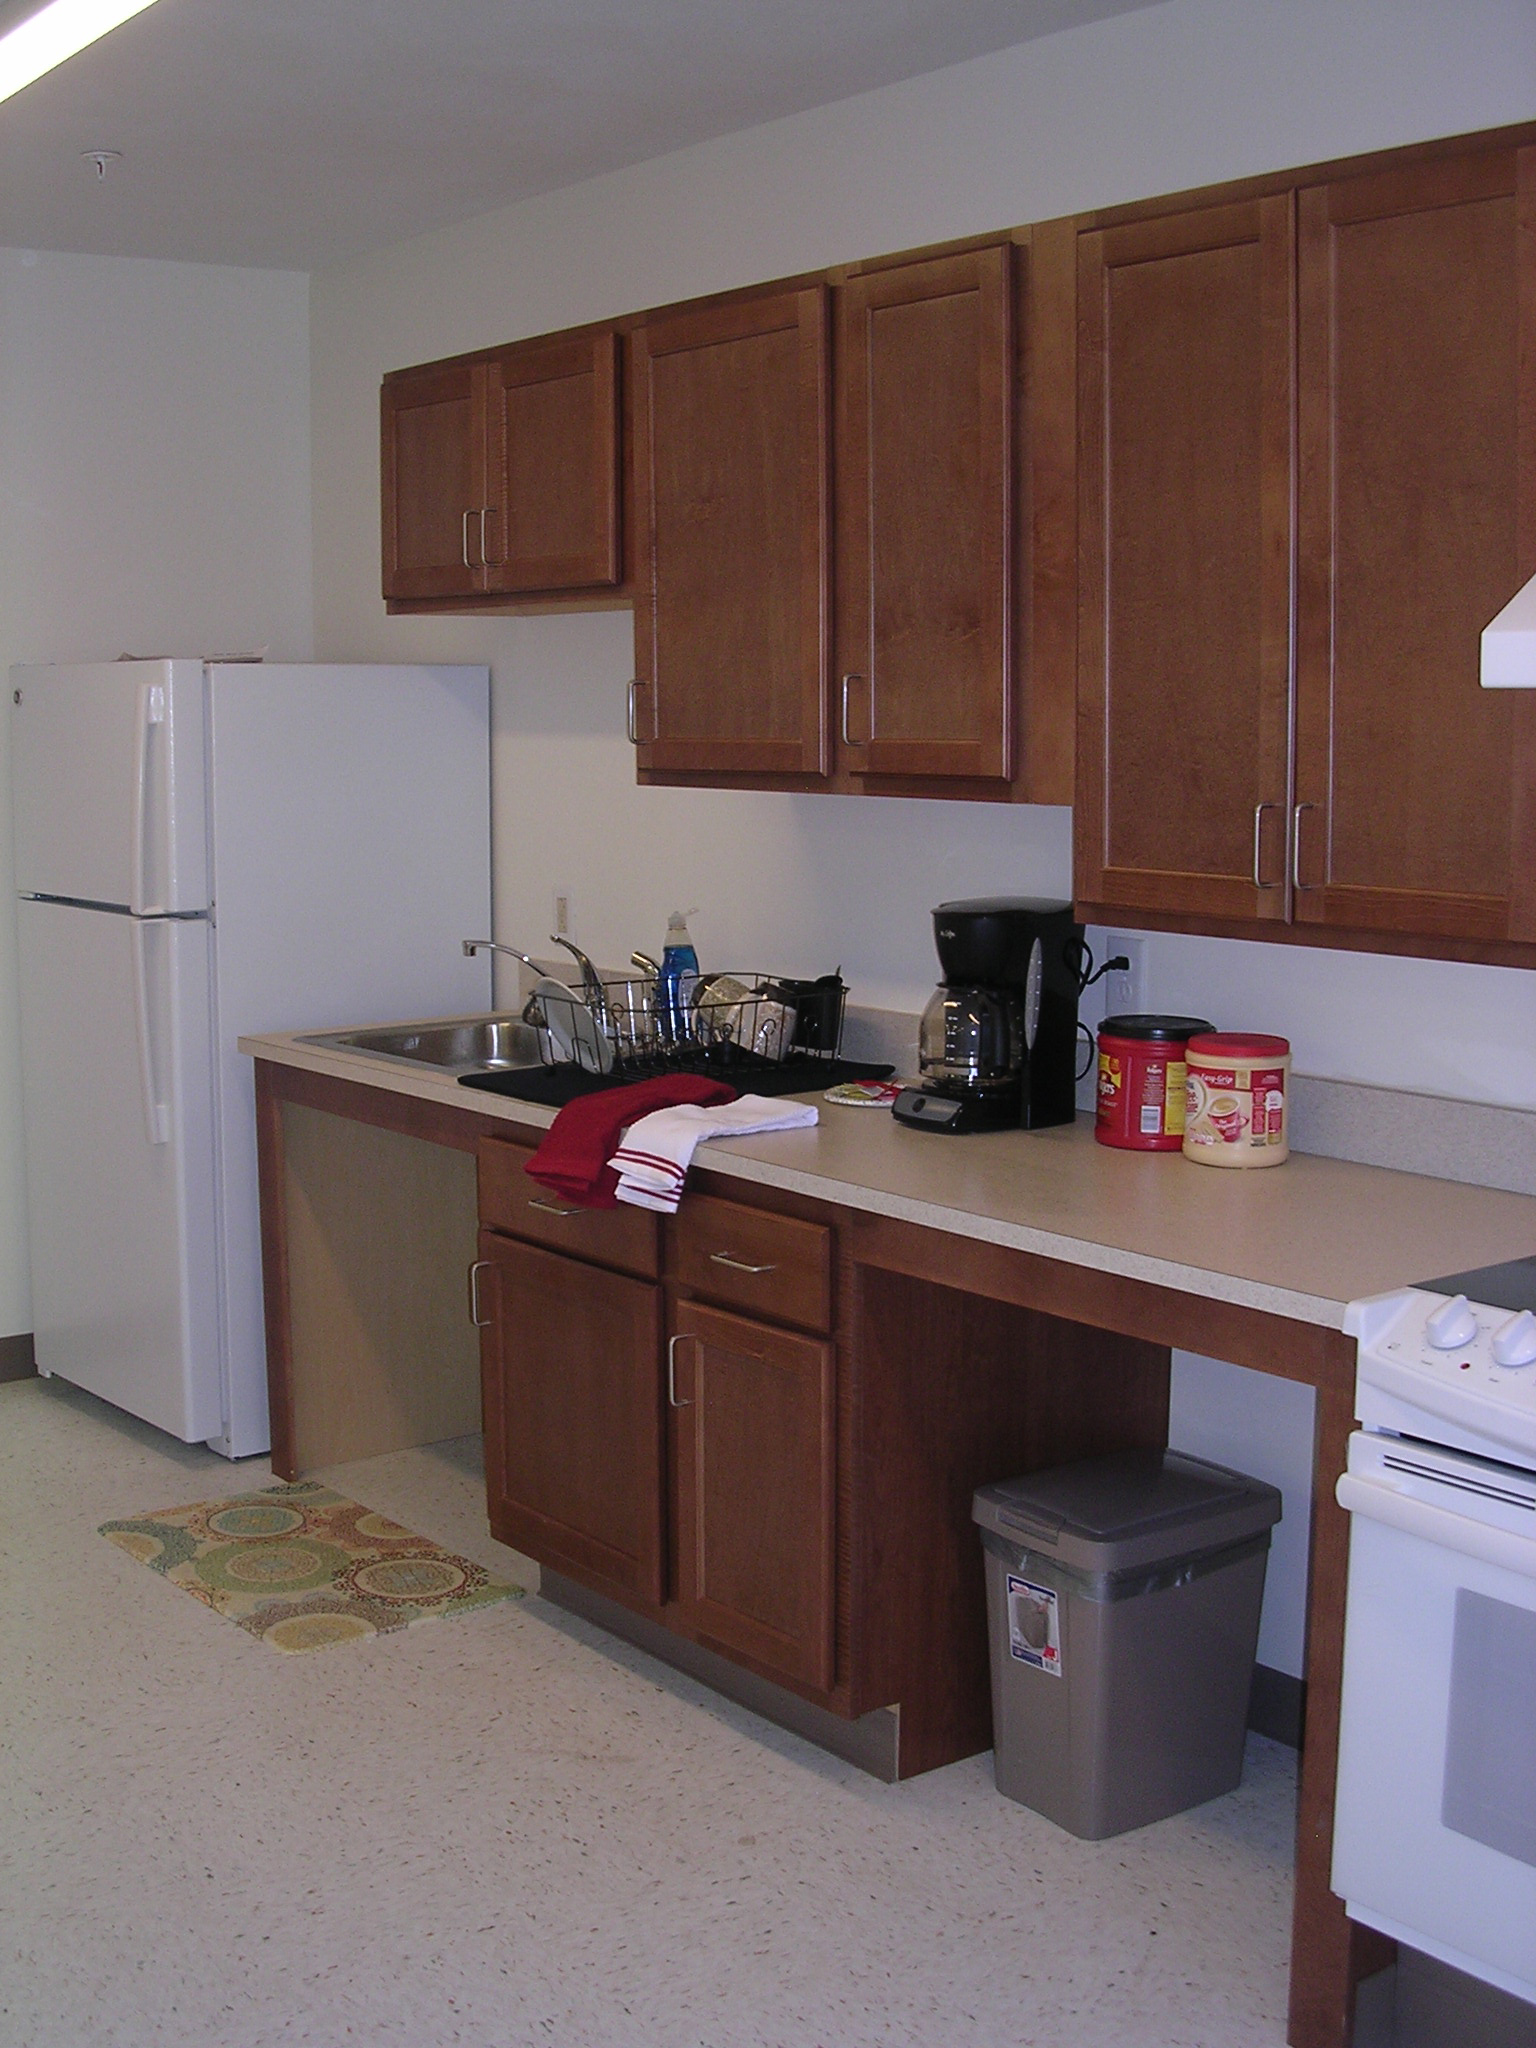 property management company client list syracuse ny community room kitchen image of seneca fields apartments